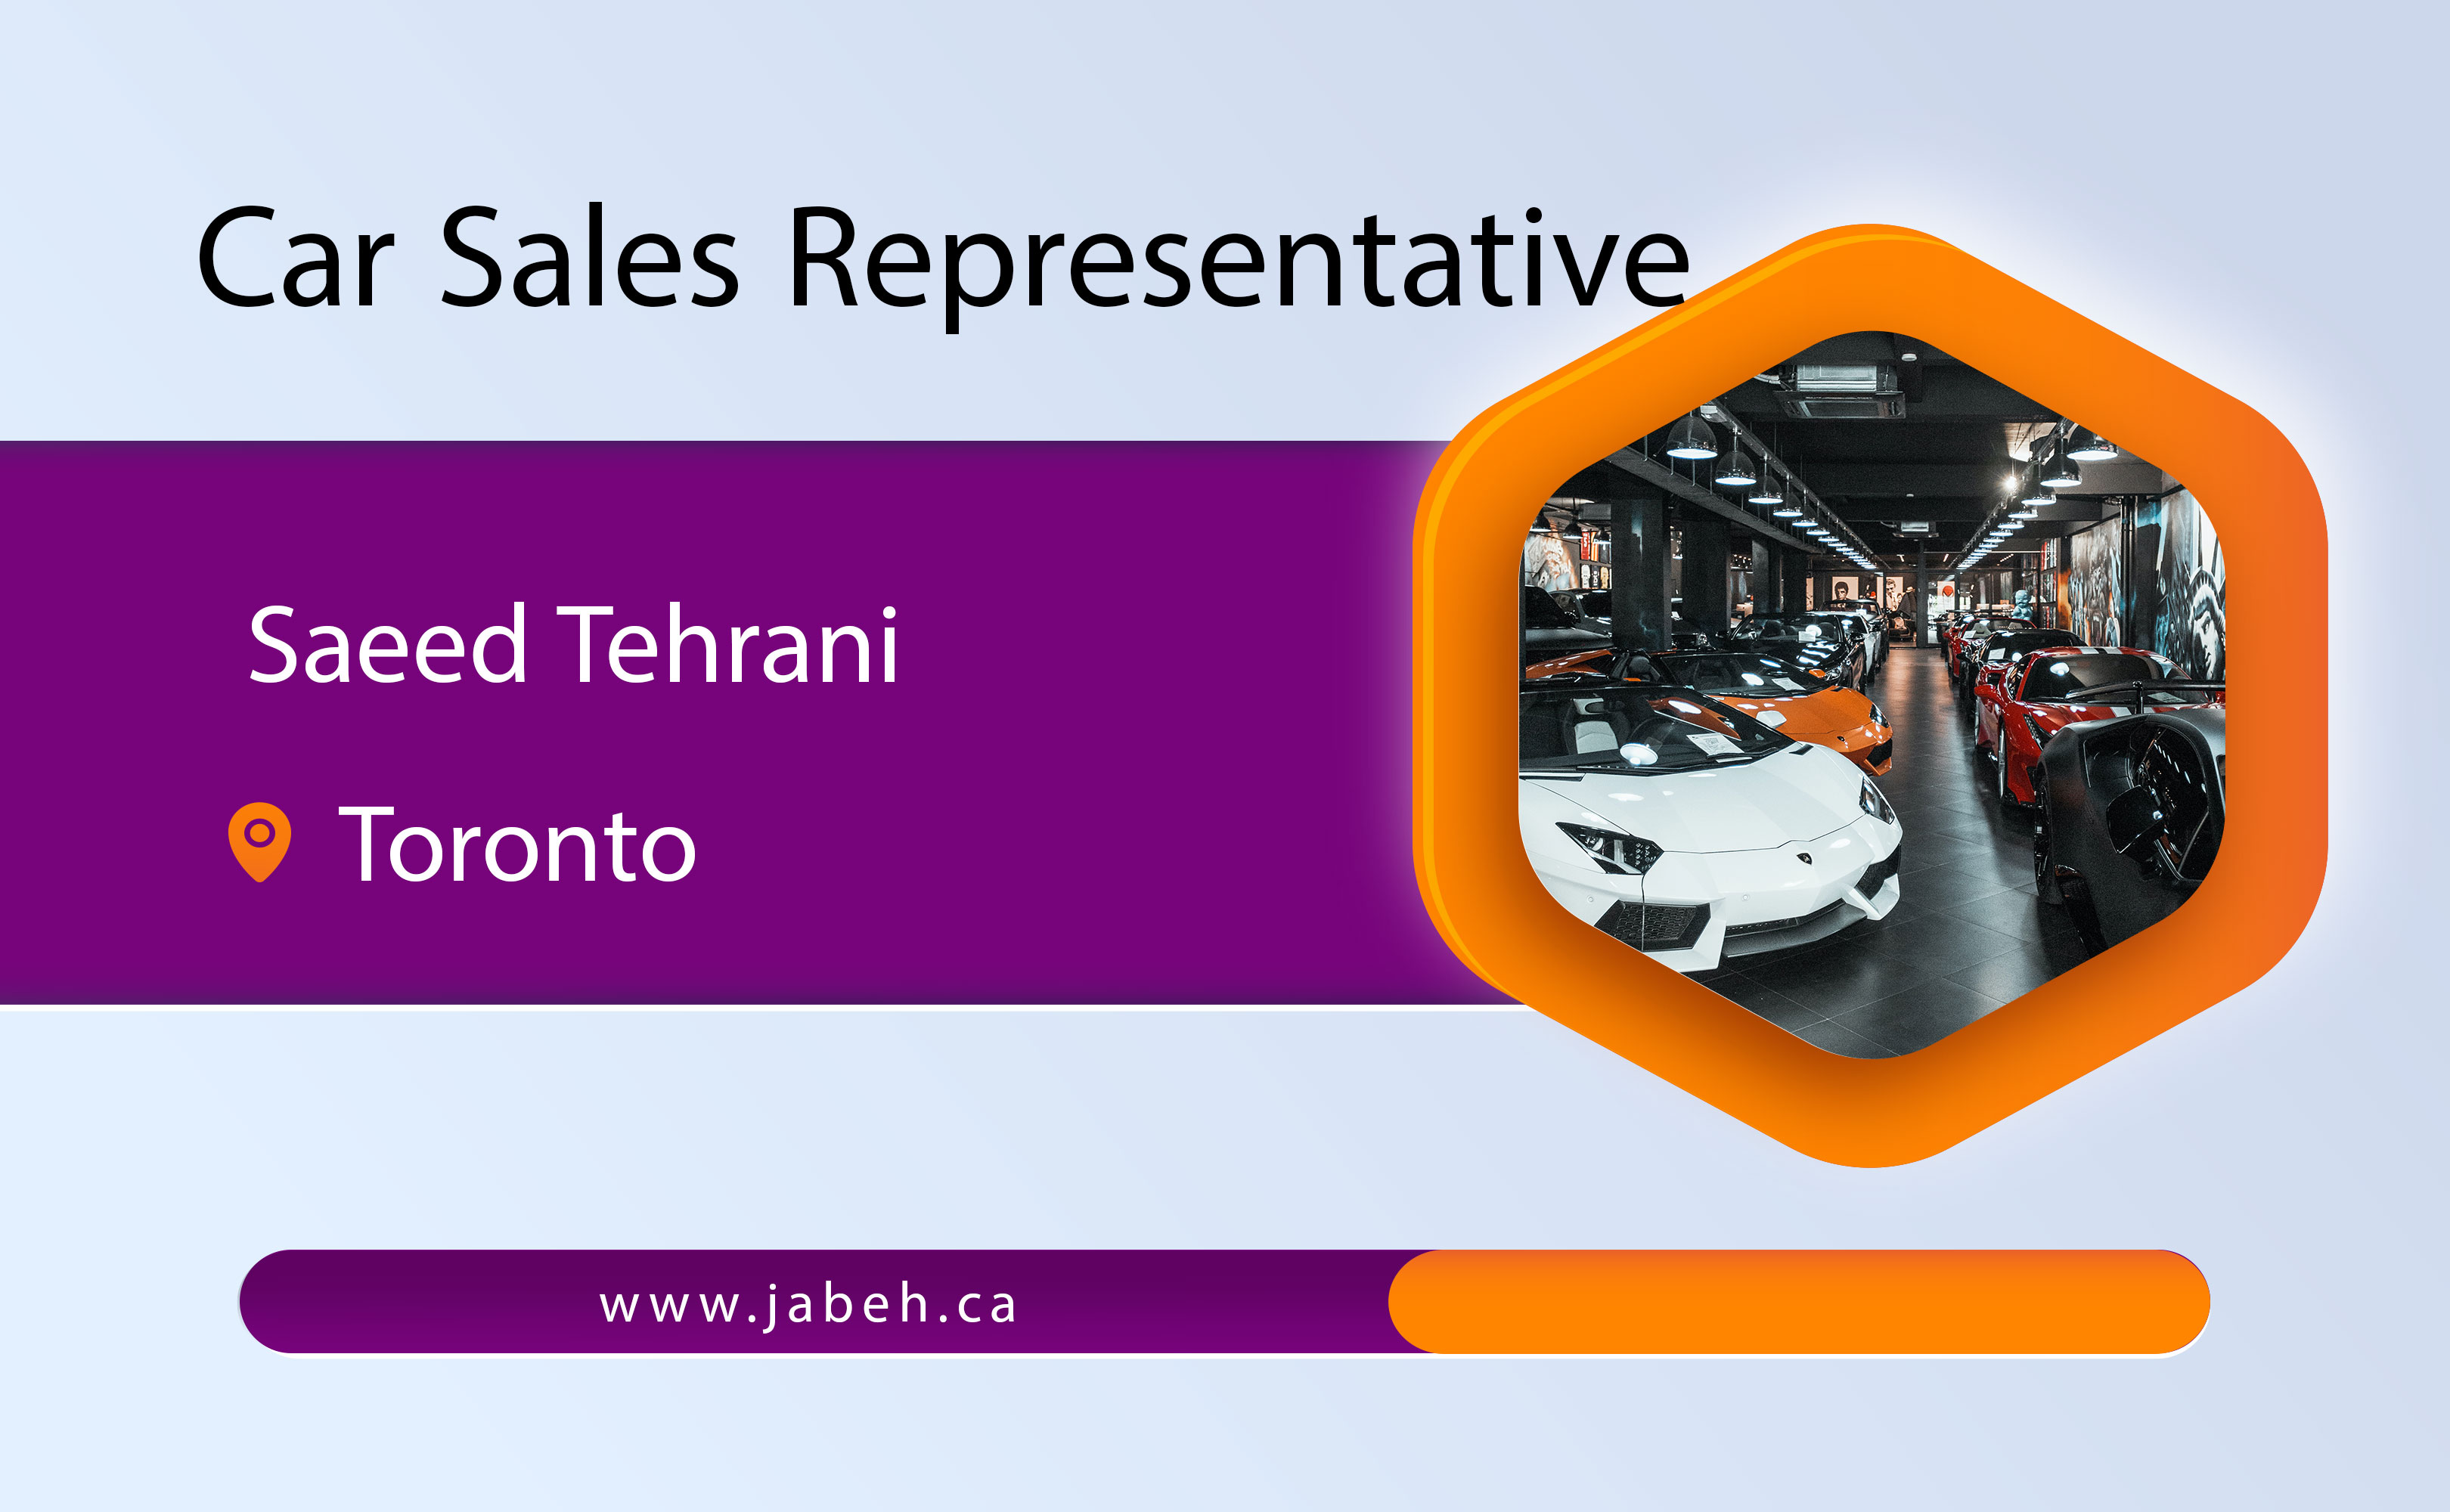 Iranian car sales representative Saeed Tehrani in Toronto